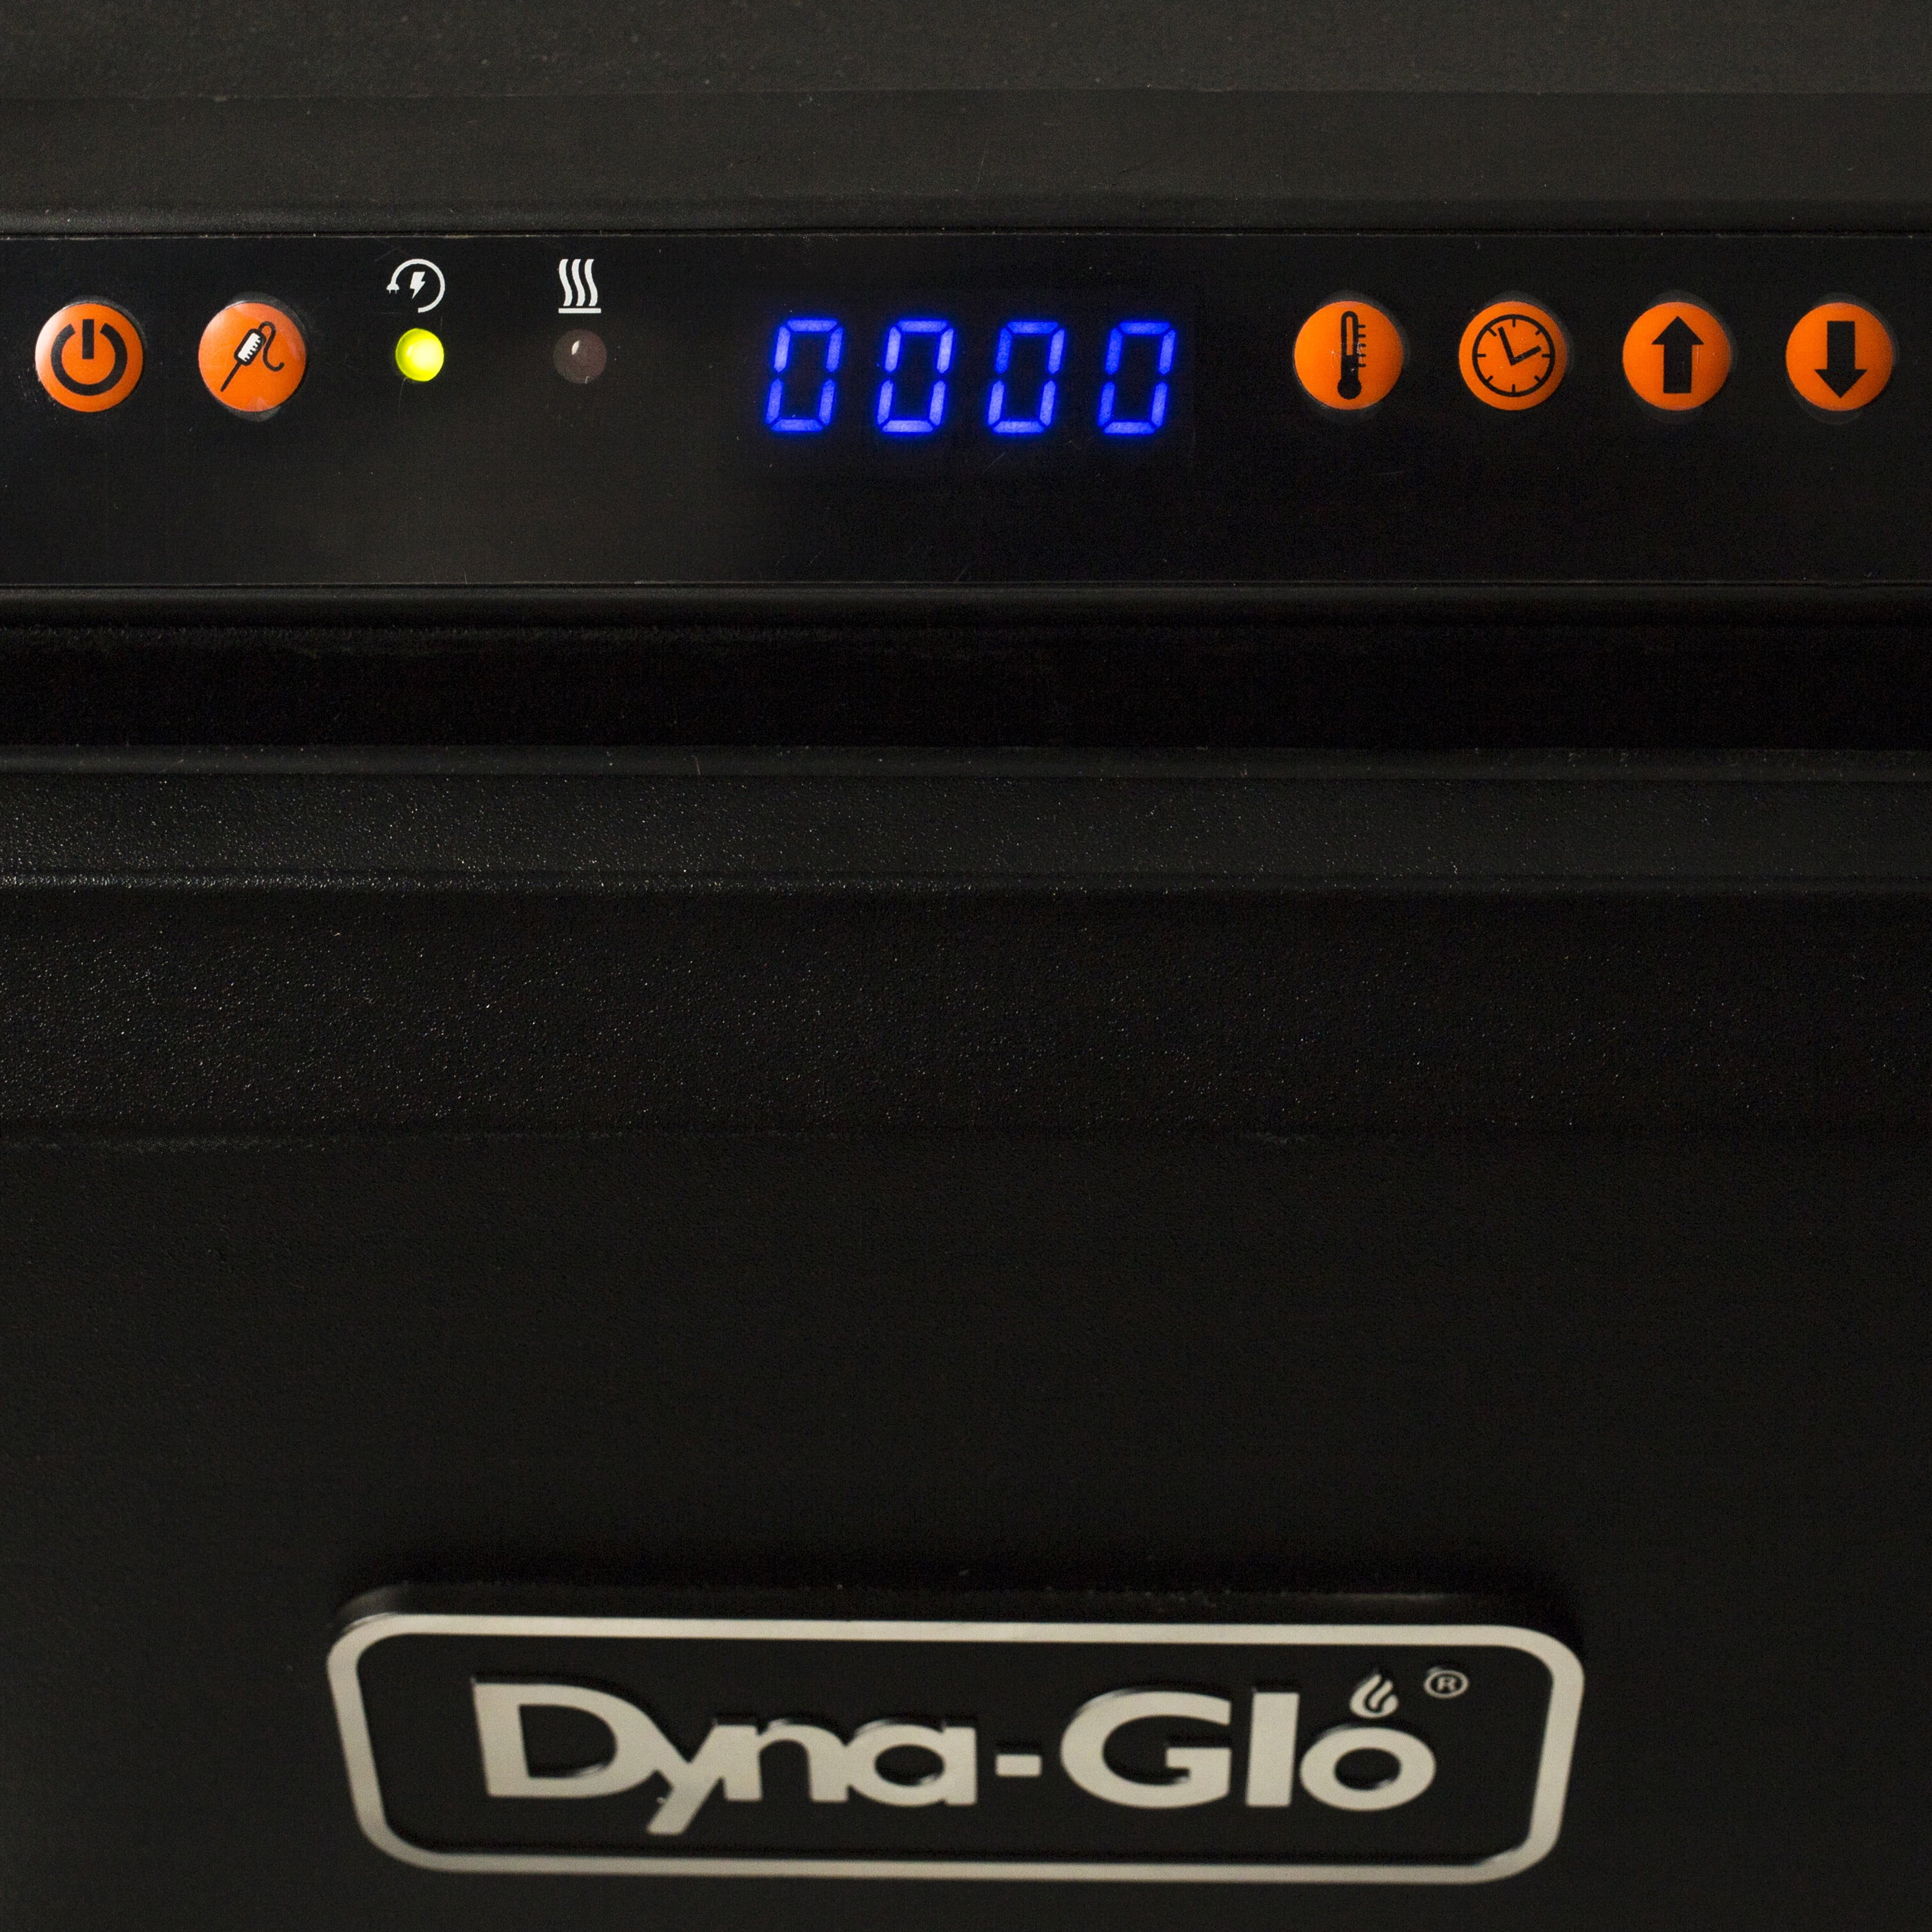  Dyna-Glo DGU732SDE-D 30 Digital Bluetooth Electric Smoker,  Silver : Patio, Lawn & Garden